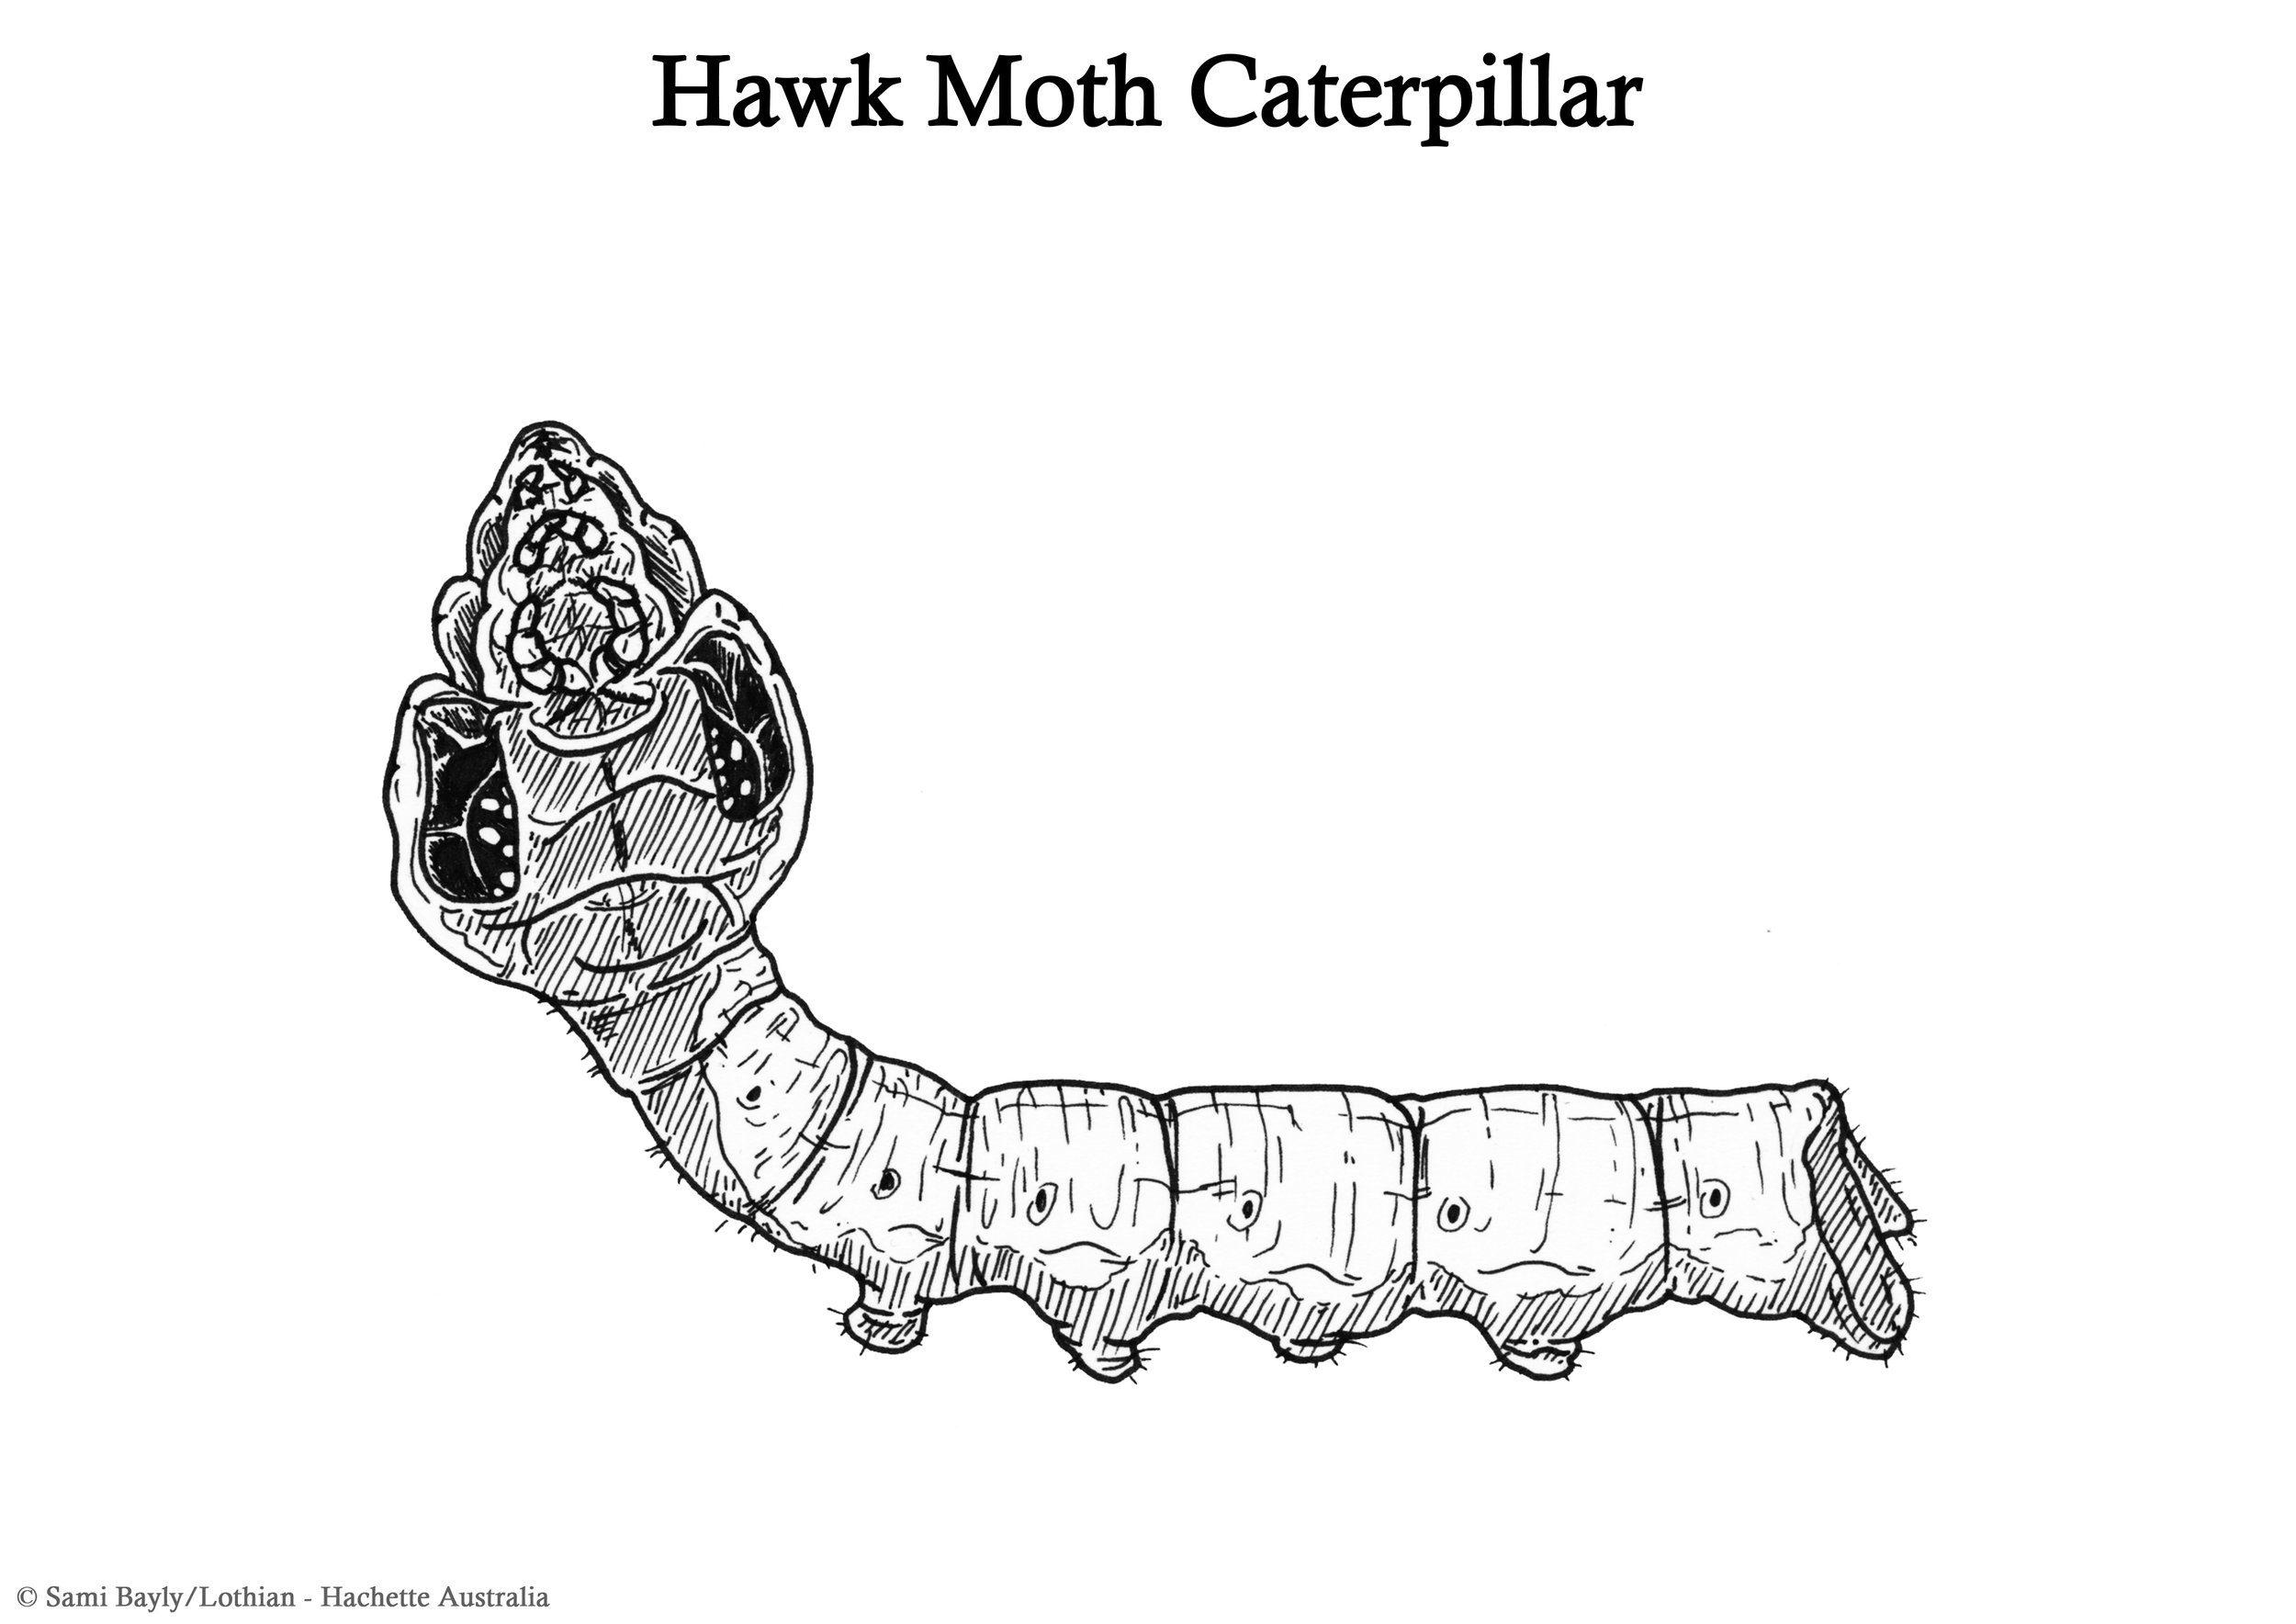 Hawk Moth Caterpillar Line Drawing.jpg